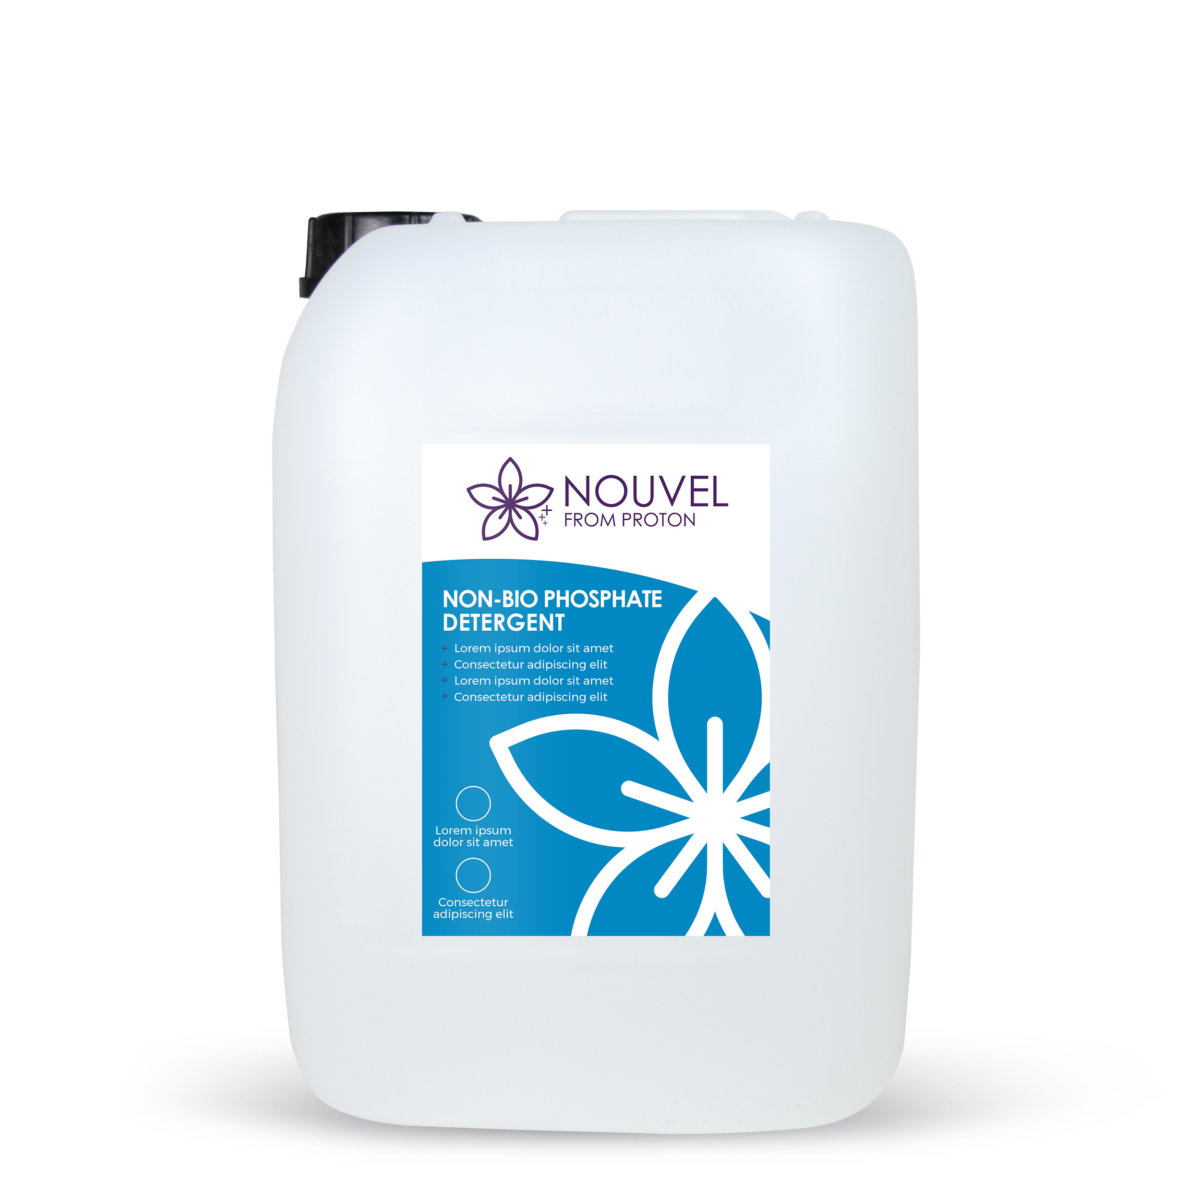 Nouvel Non-Bio Phosphate Detergent